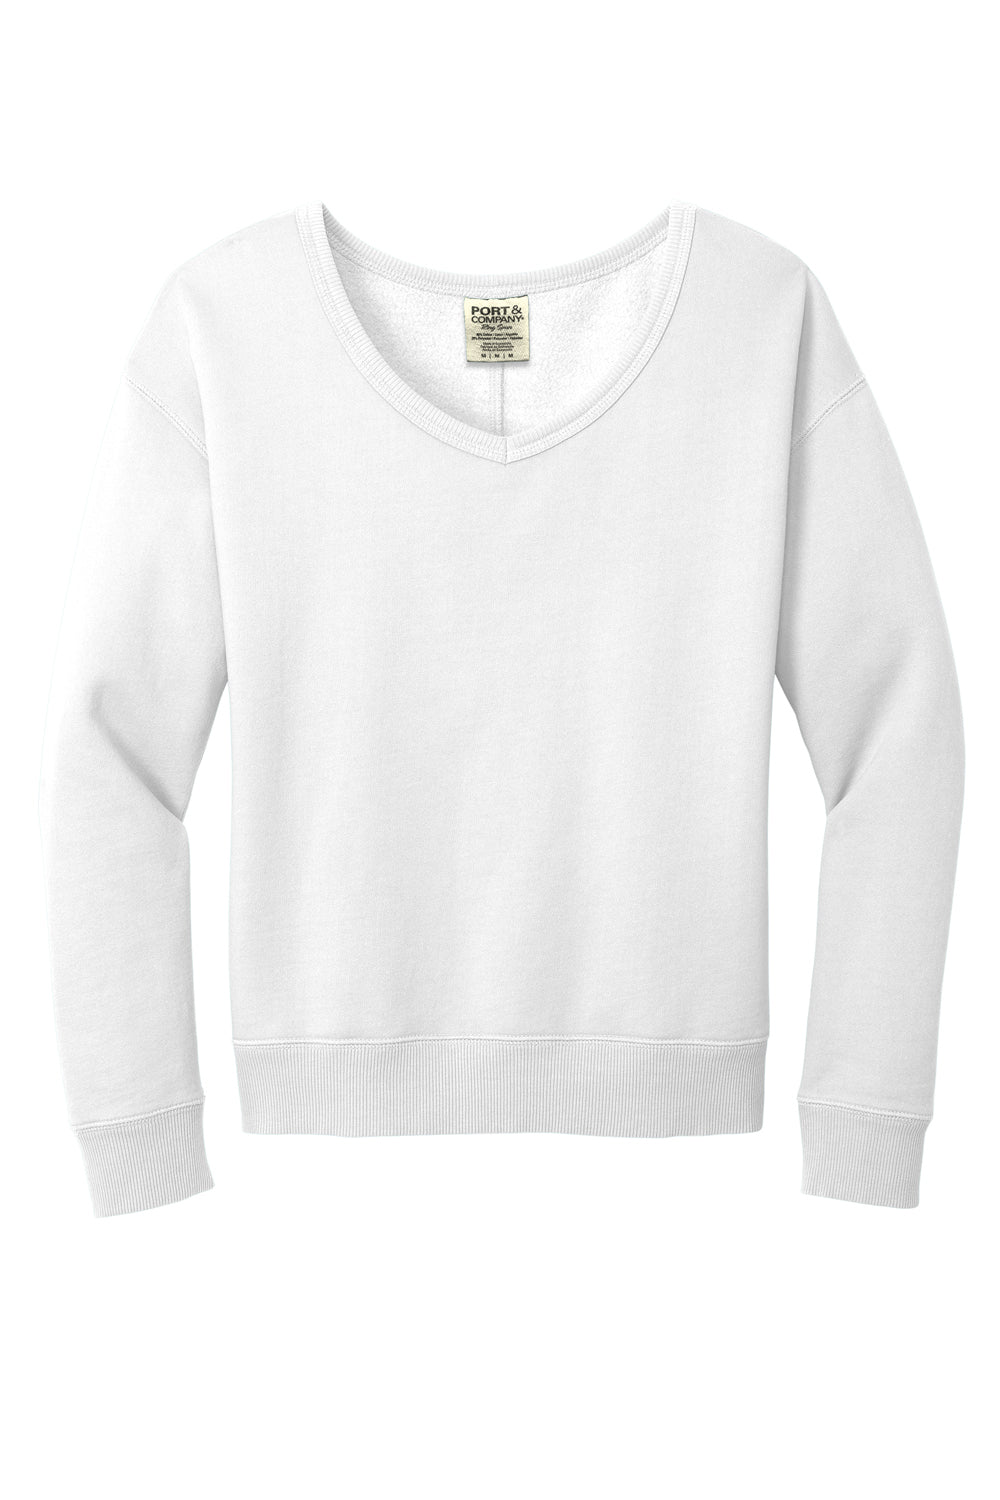 Port & Company LPC098V Womens Beach Wash Garment Dyed V-Neck Sweatshirt White Flat Front